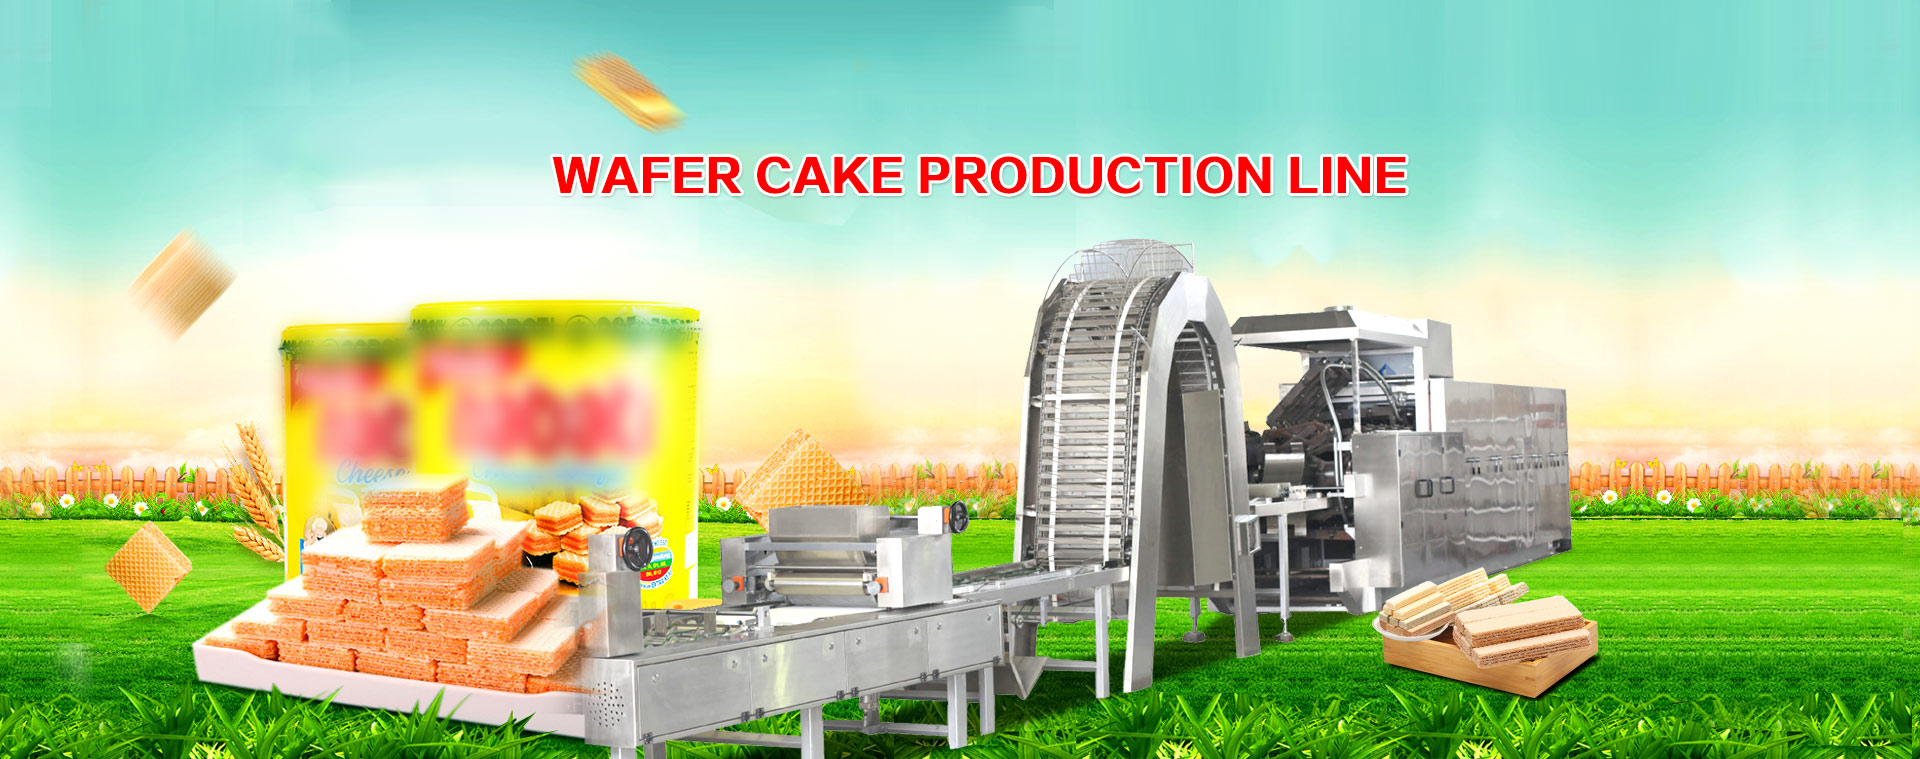 Wafer Cake Production Line